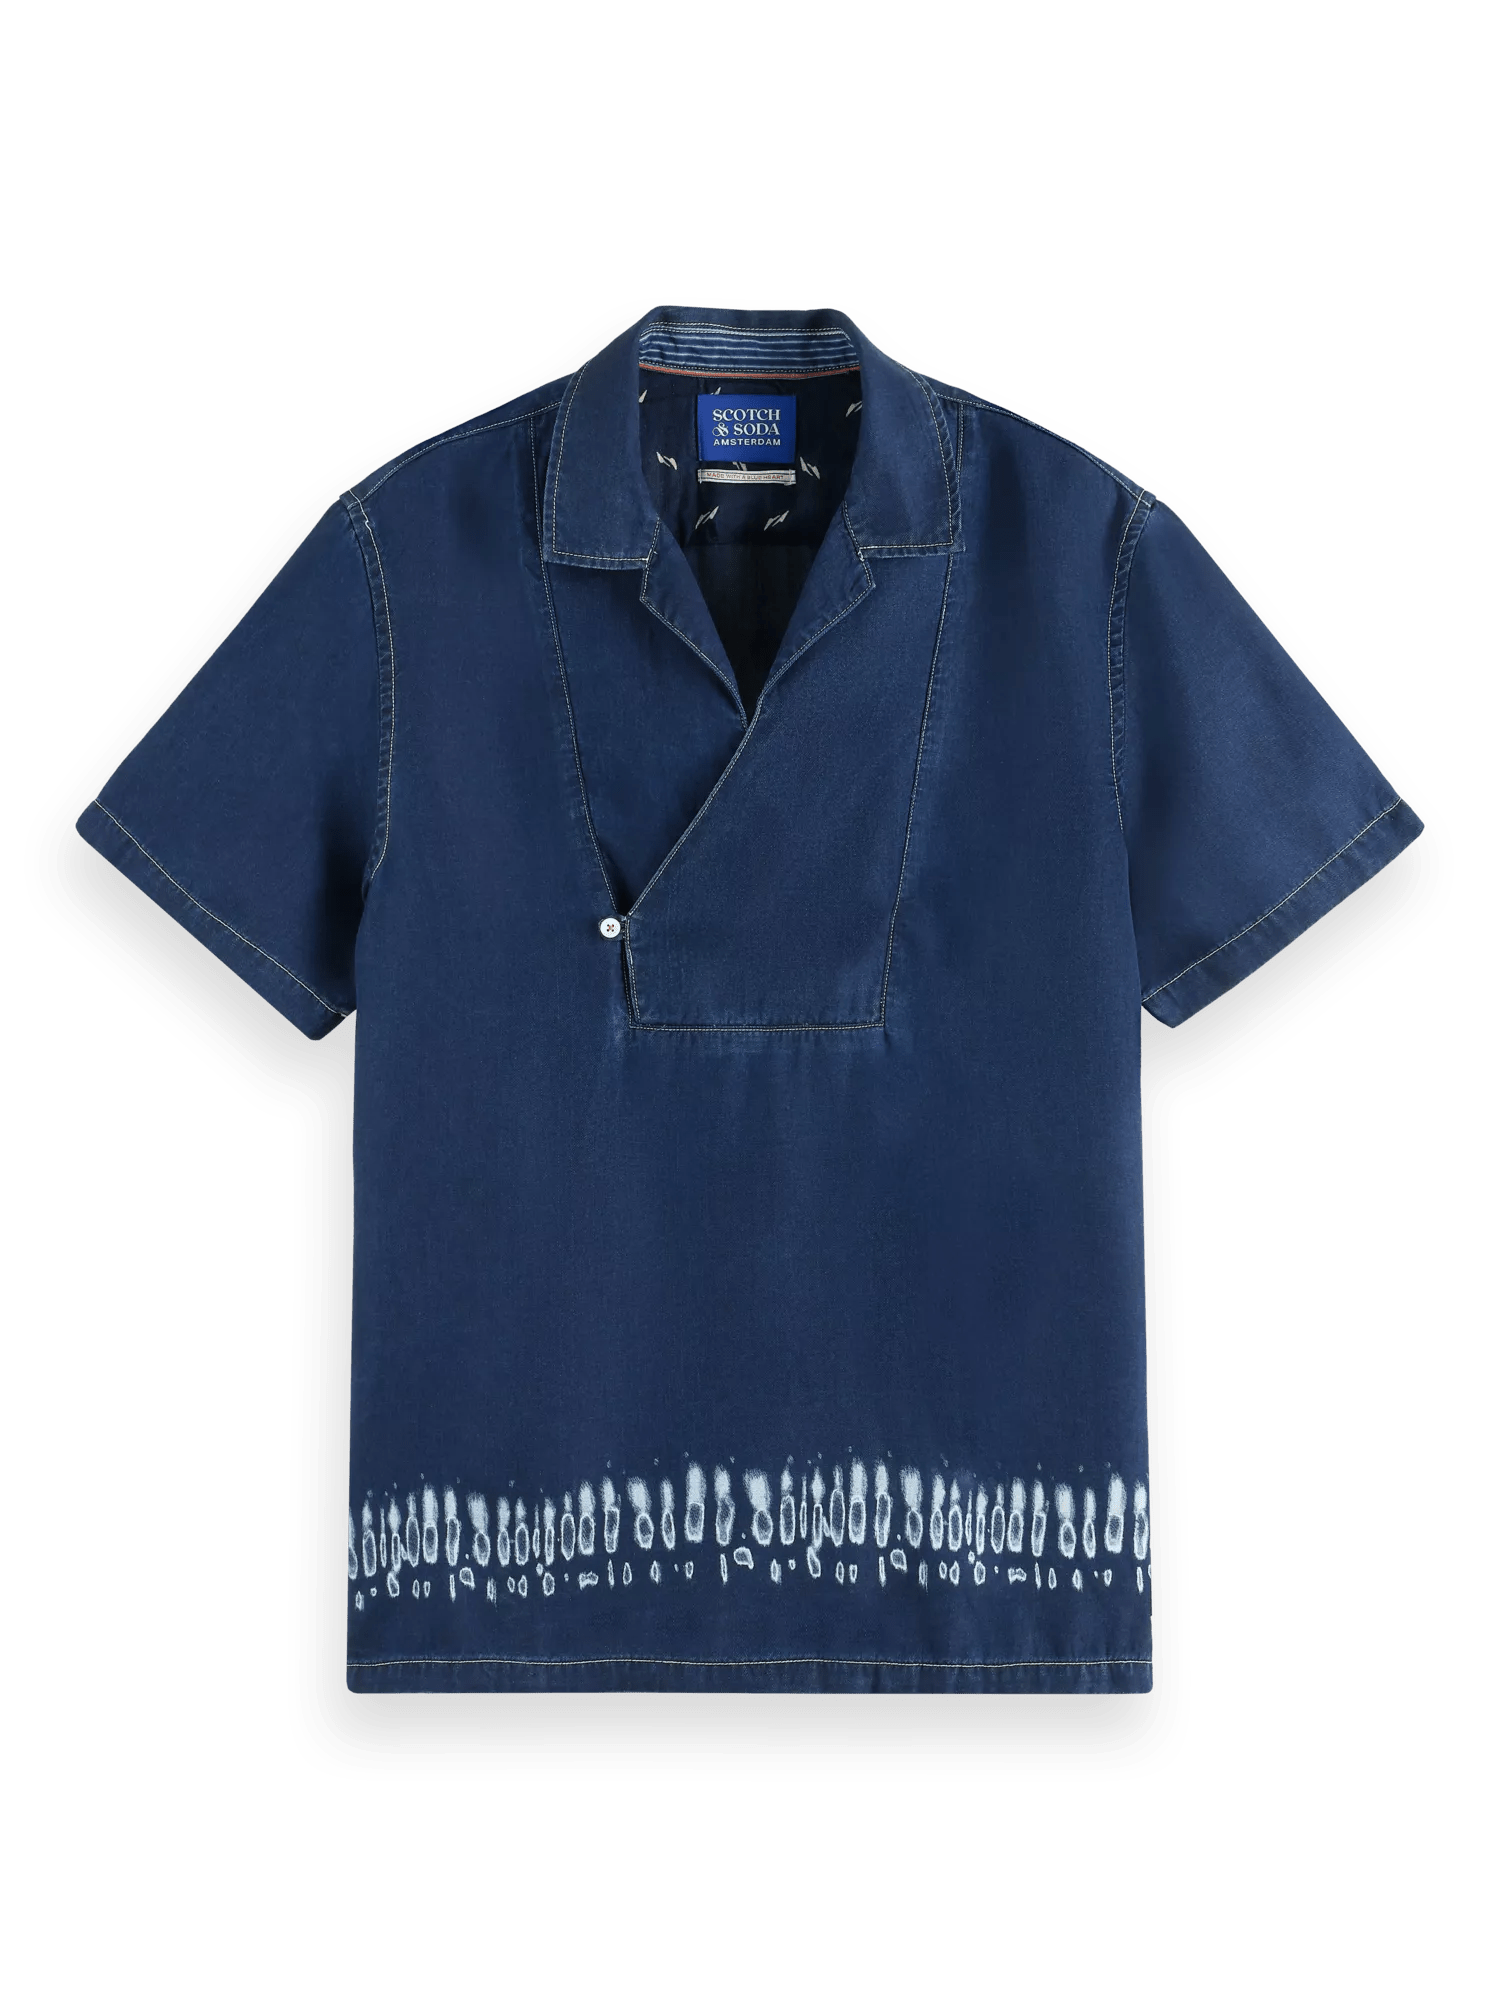 Scotch & Soda Indigo popover shirt with tie dye wash effects FNT